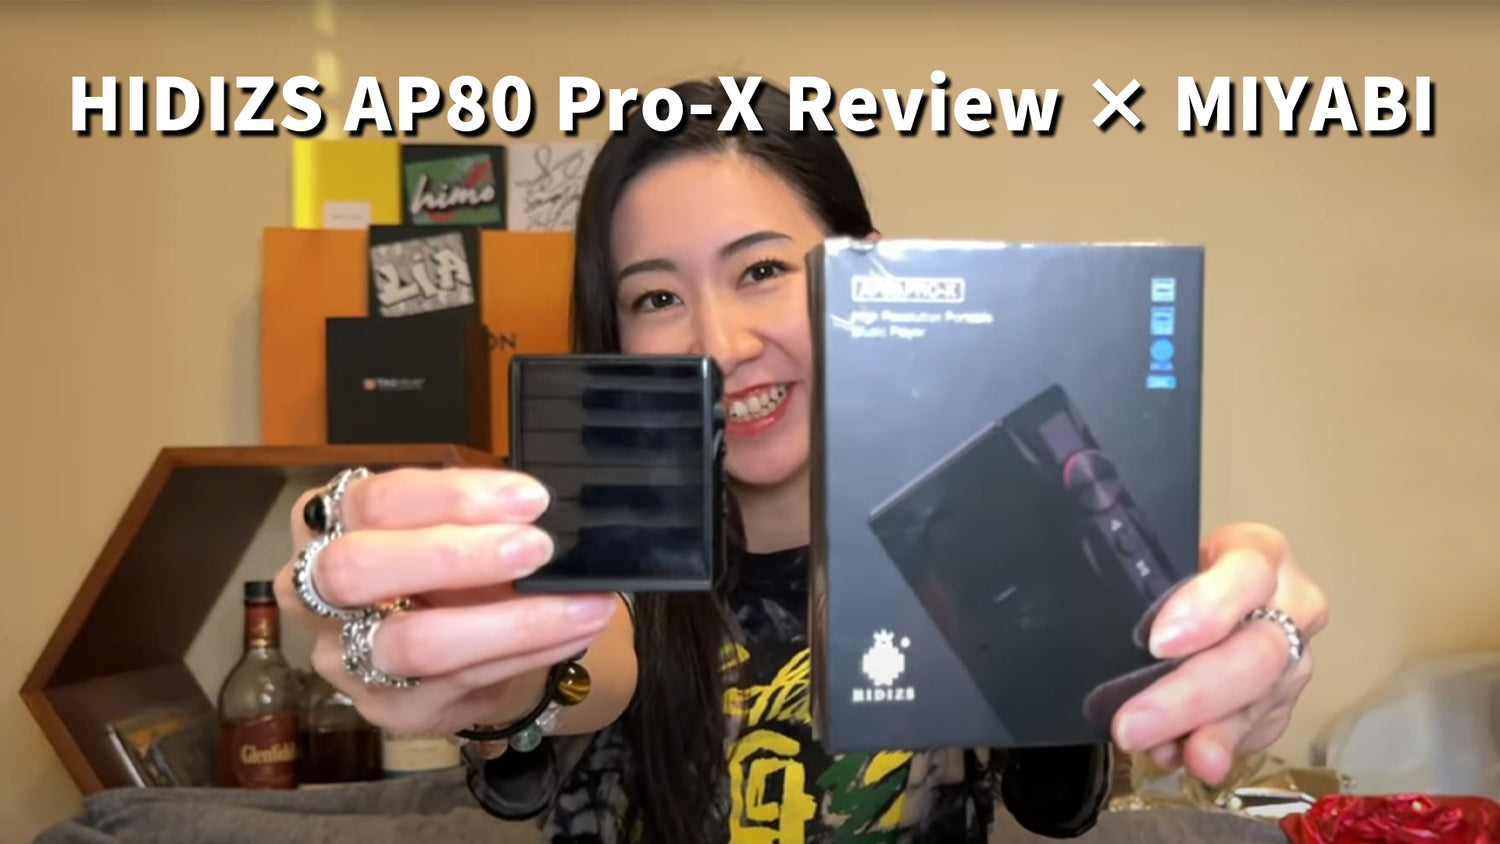 HIDIZS AP80 Pro-X Review - MIYABI